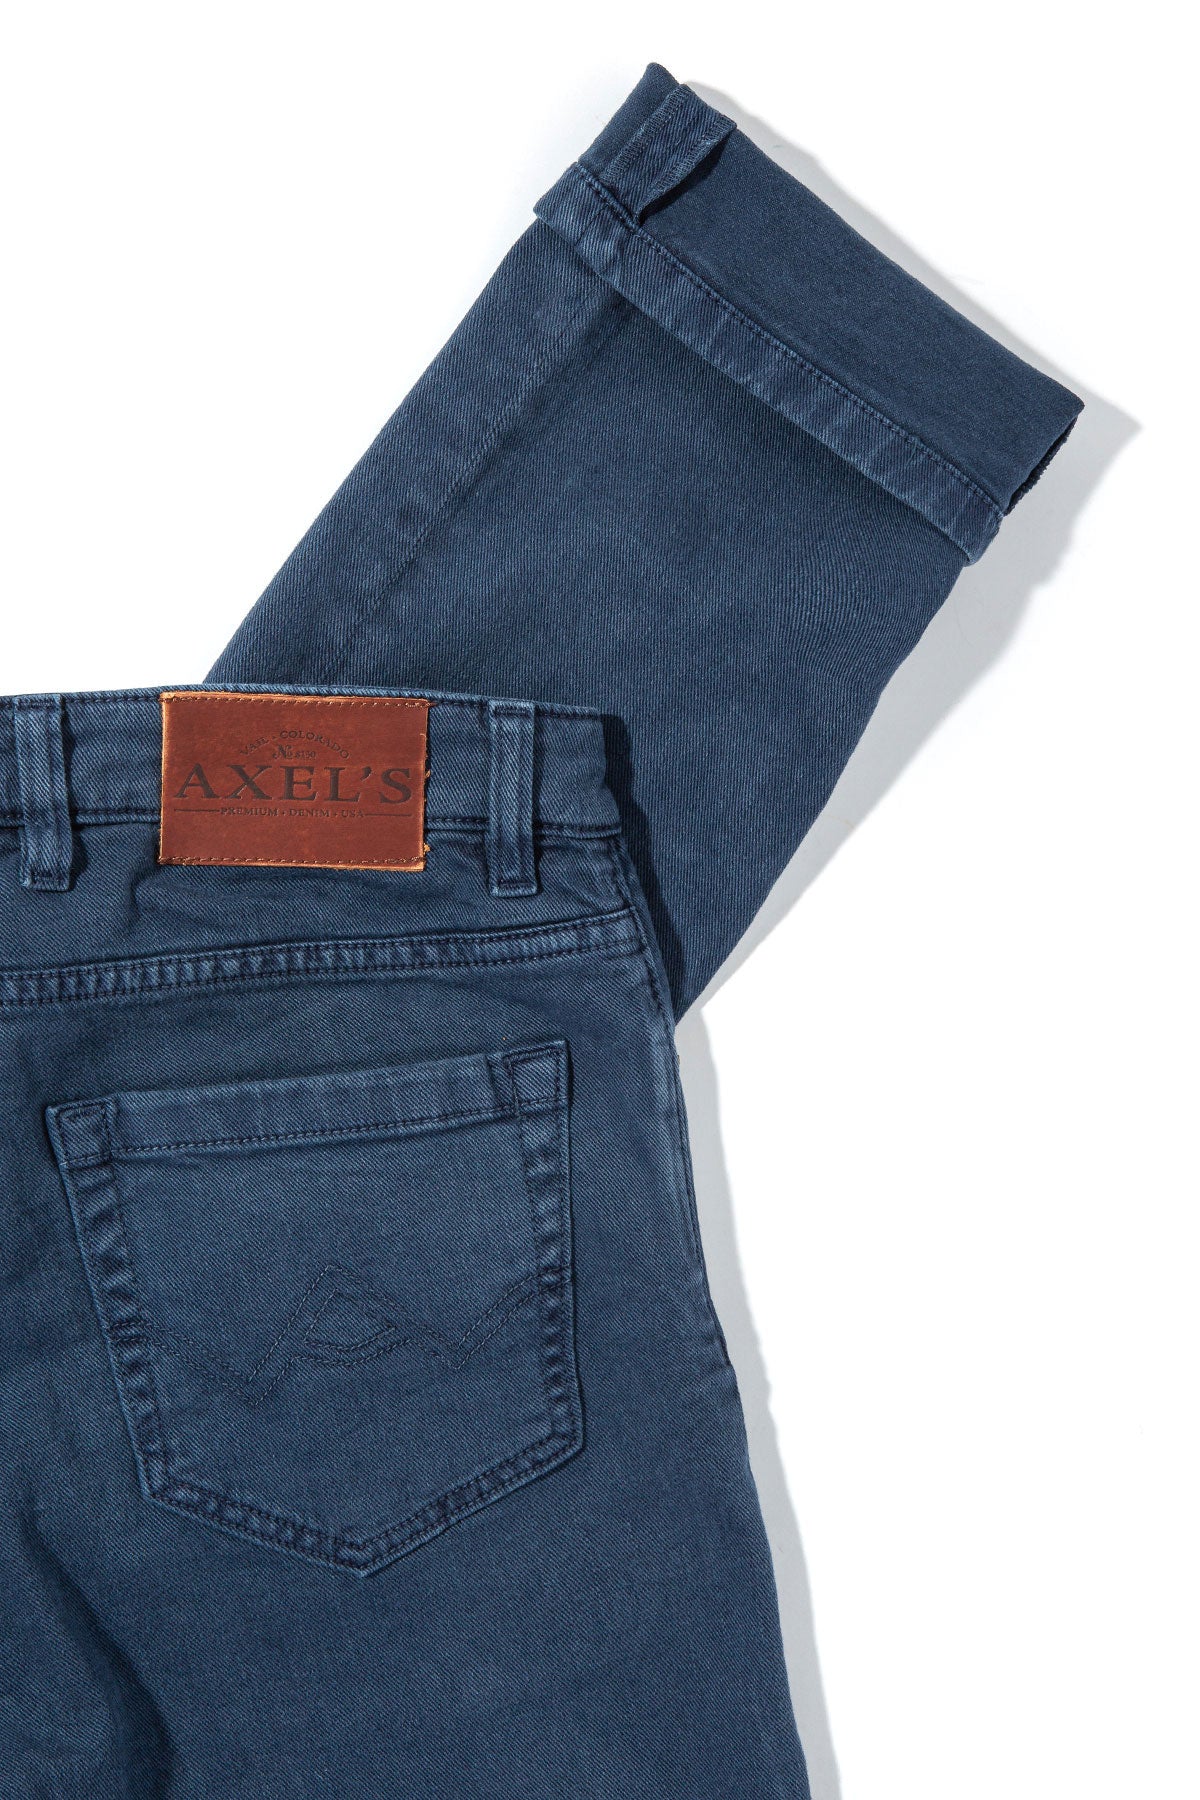 Taos Slim Vintage Denim in Blu Oxford | Mens - Pants - 5 Pocket | Axels Premium Denim